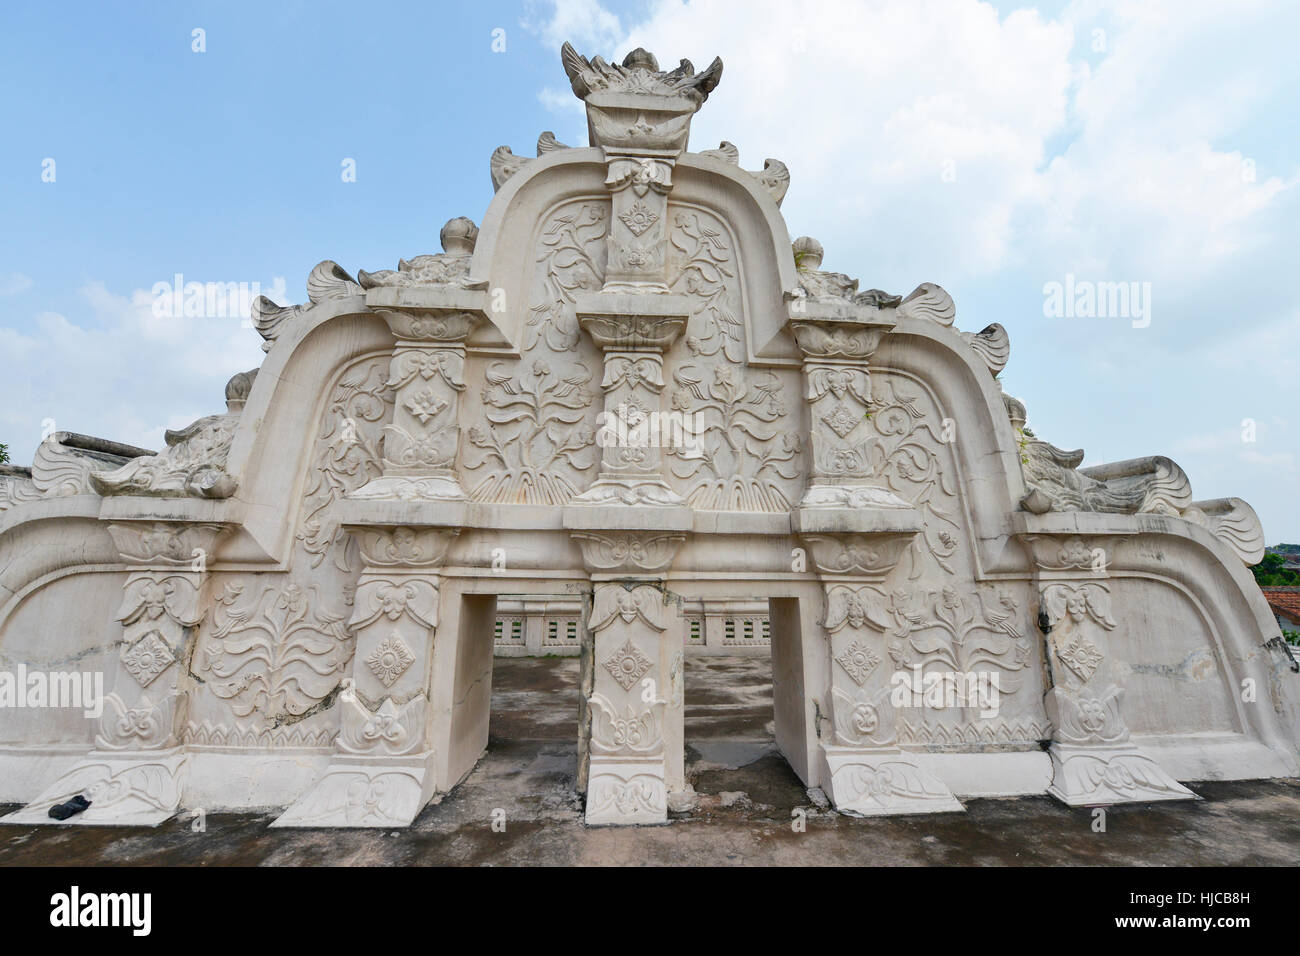 Taman Sari also known as Water Castle in Yogyakarta, Java, Indonesia Stock Photo